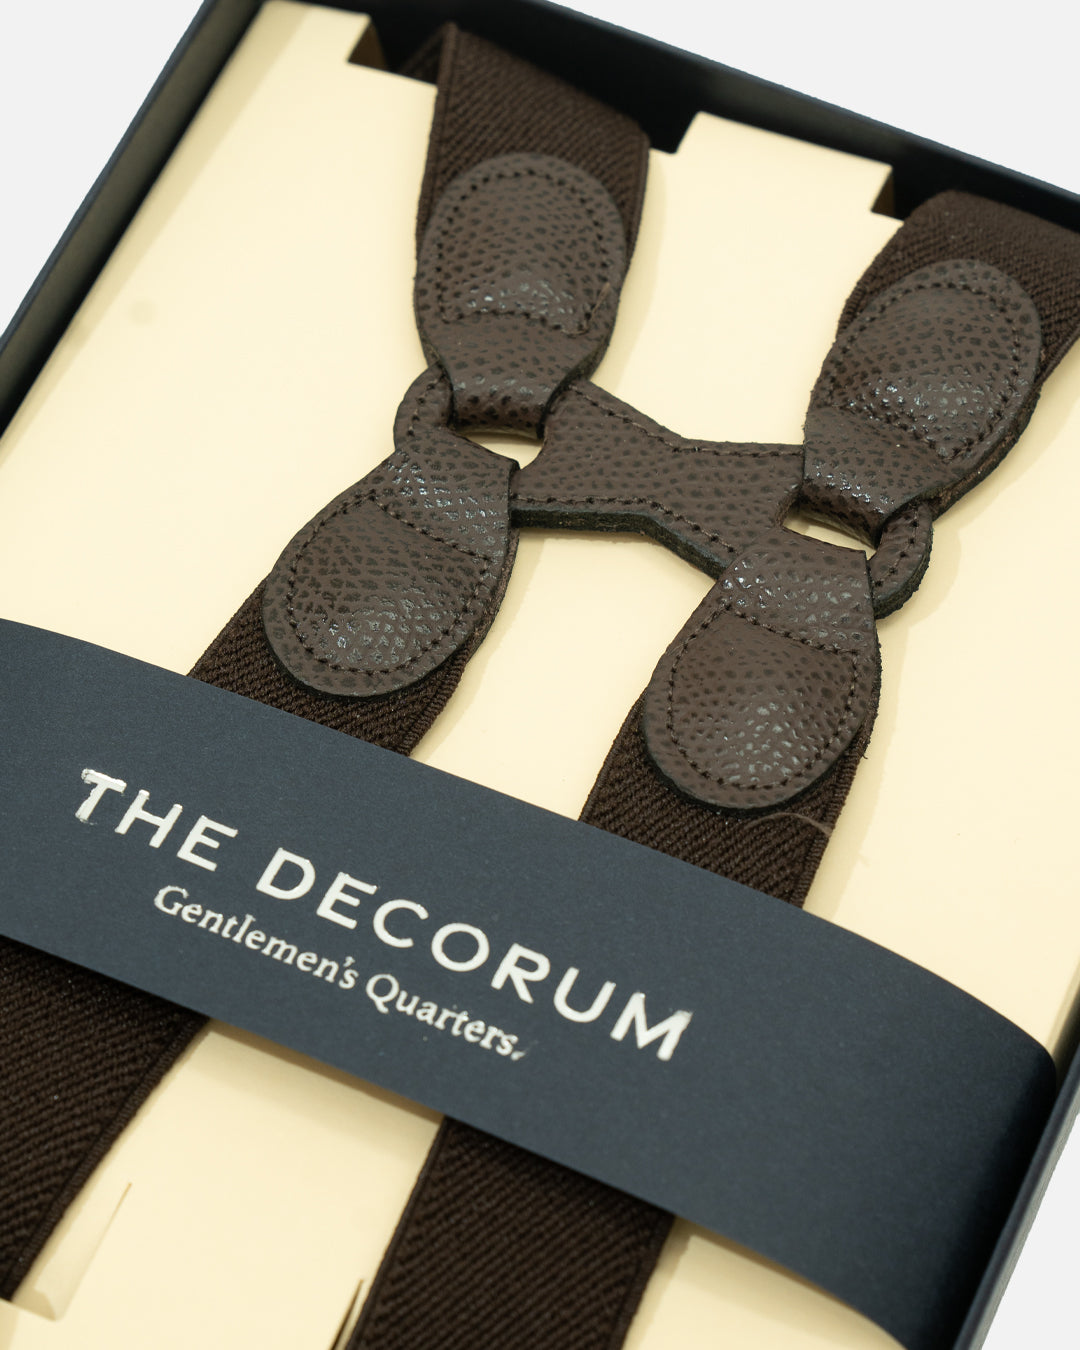 The Decorum Braces in Dark Brown (Suspenders)